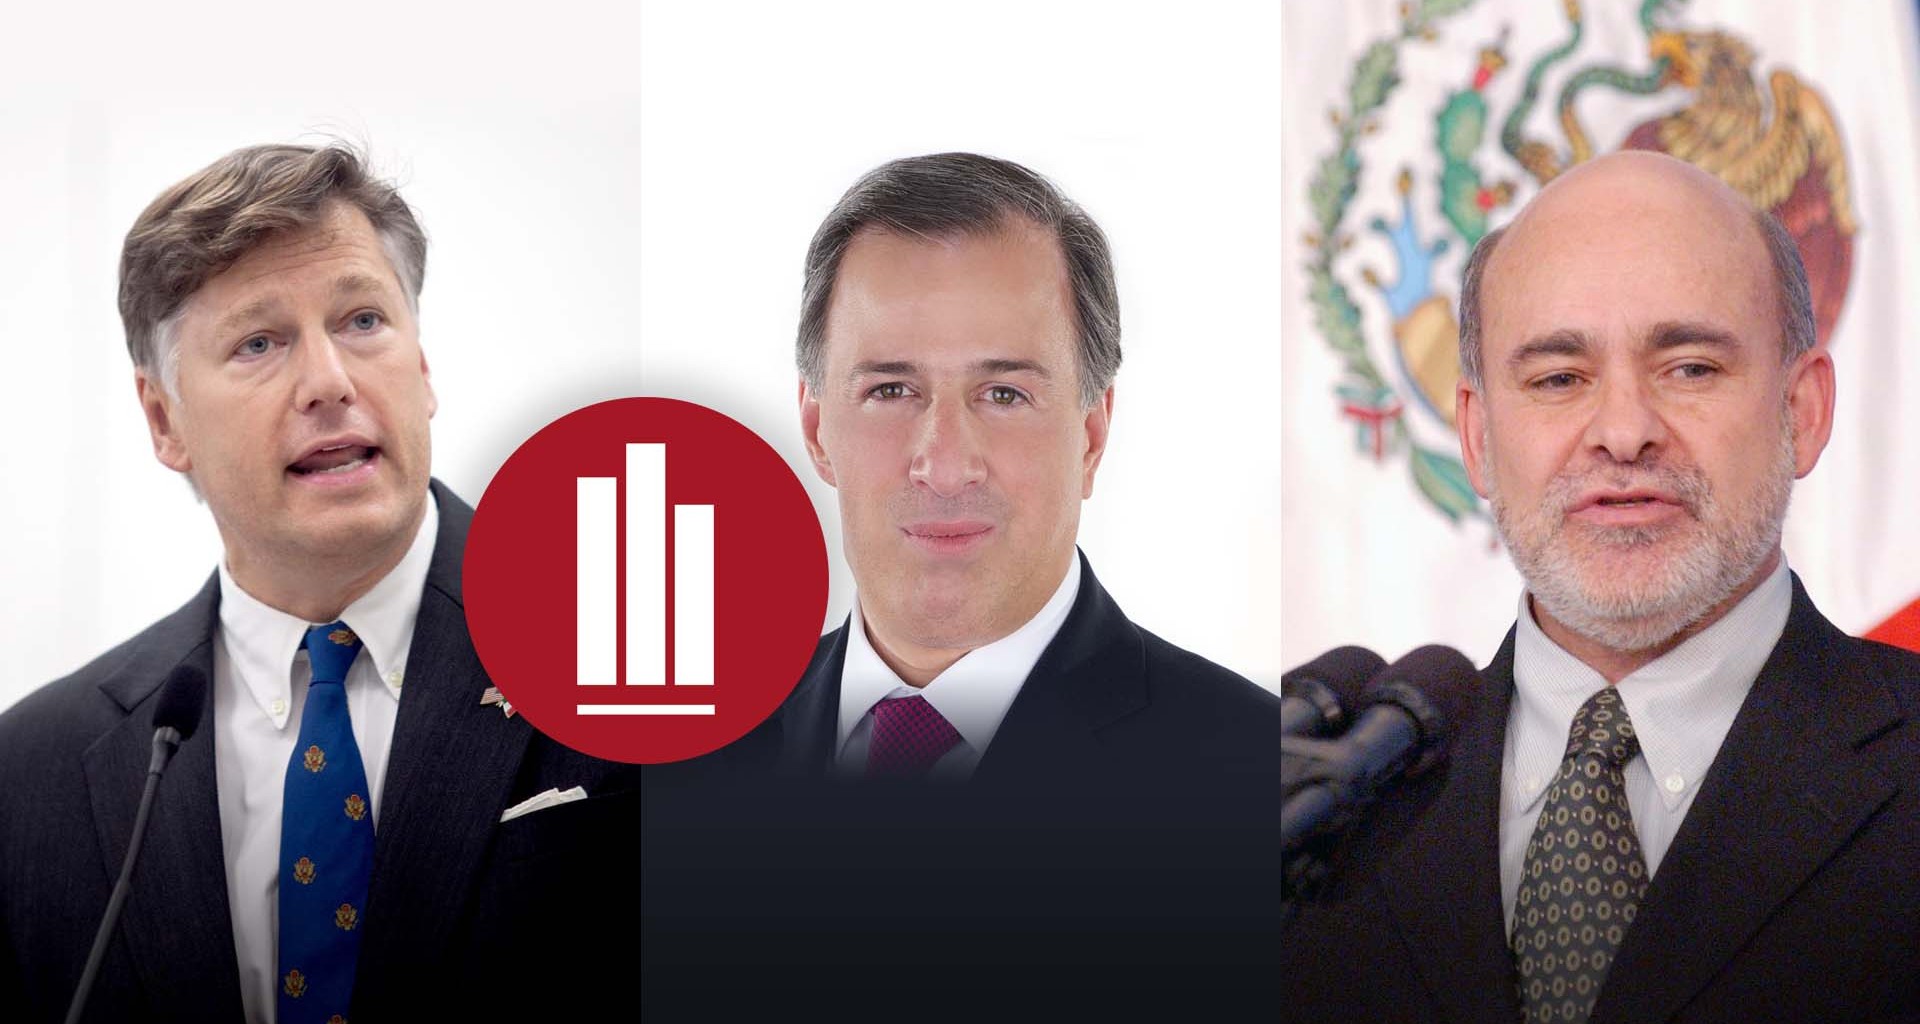 Dialogarán en foro del Tec sobre relación comercial entre México y EU